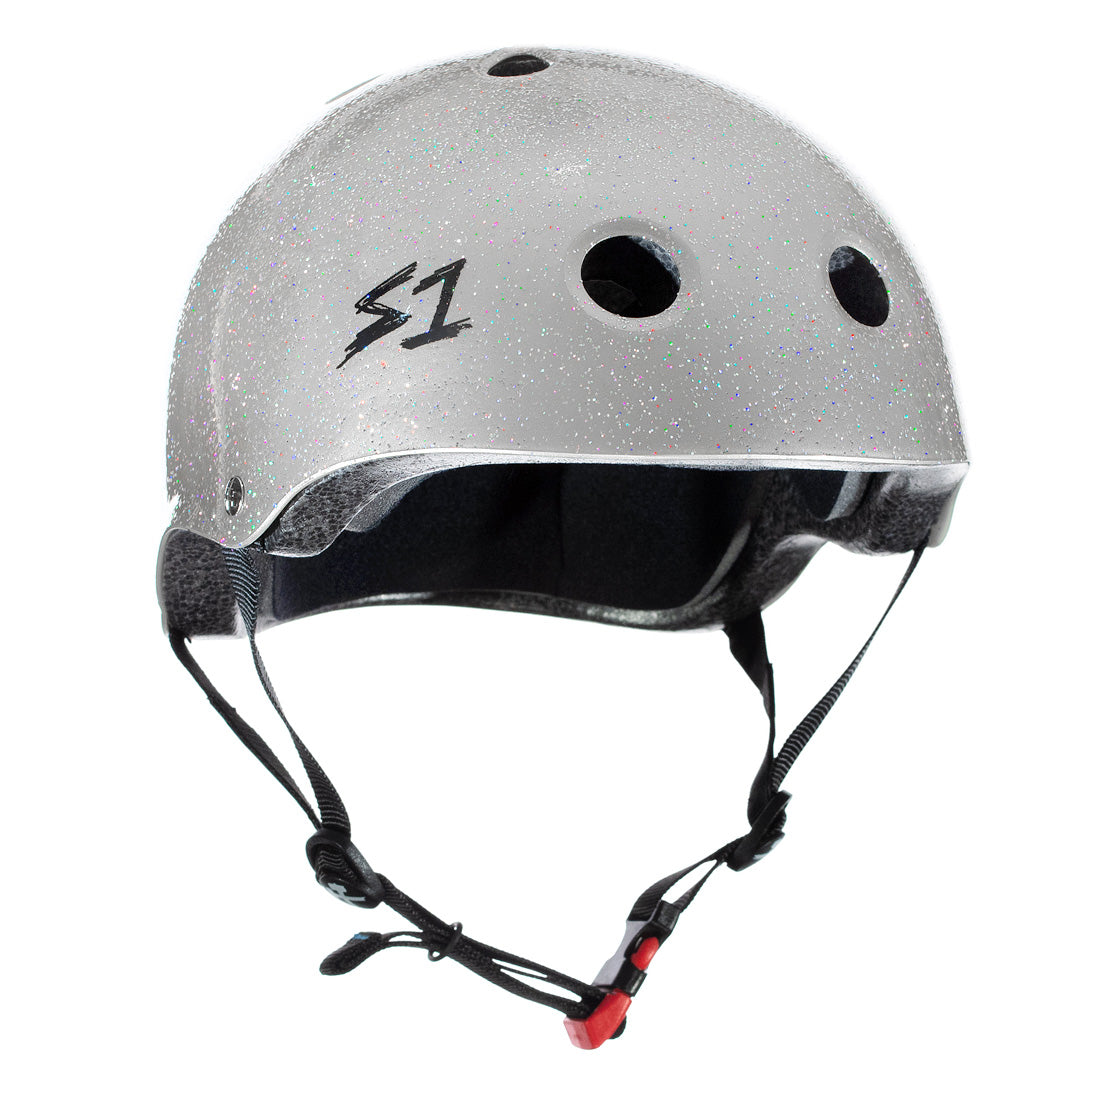 S-One Mini Lifer Helmet - Silver Glitter Helmets